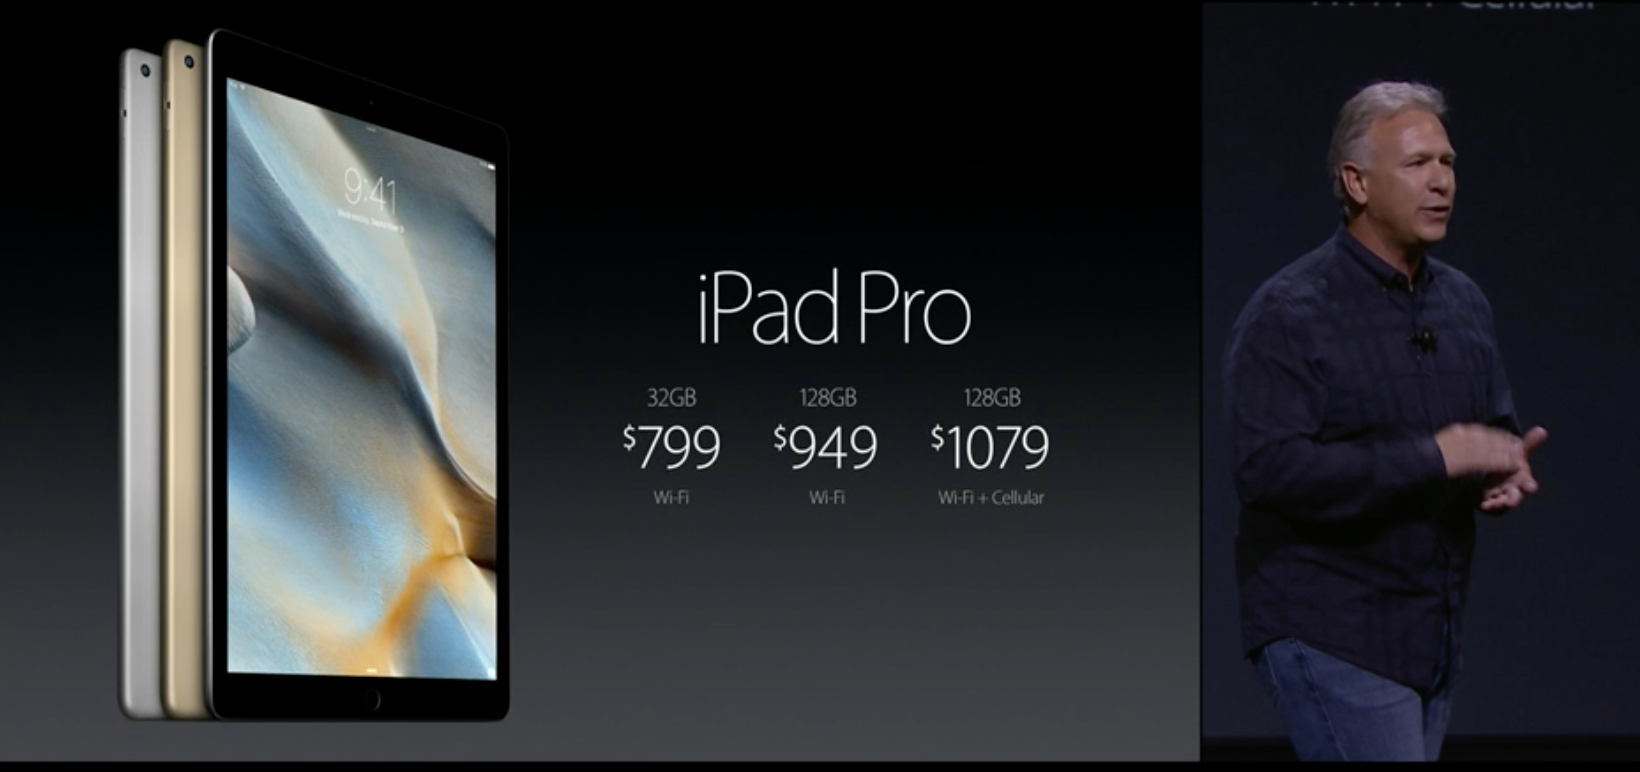 iPad-Pro_Pricing